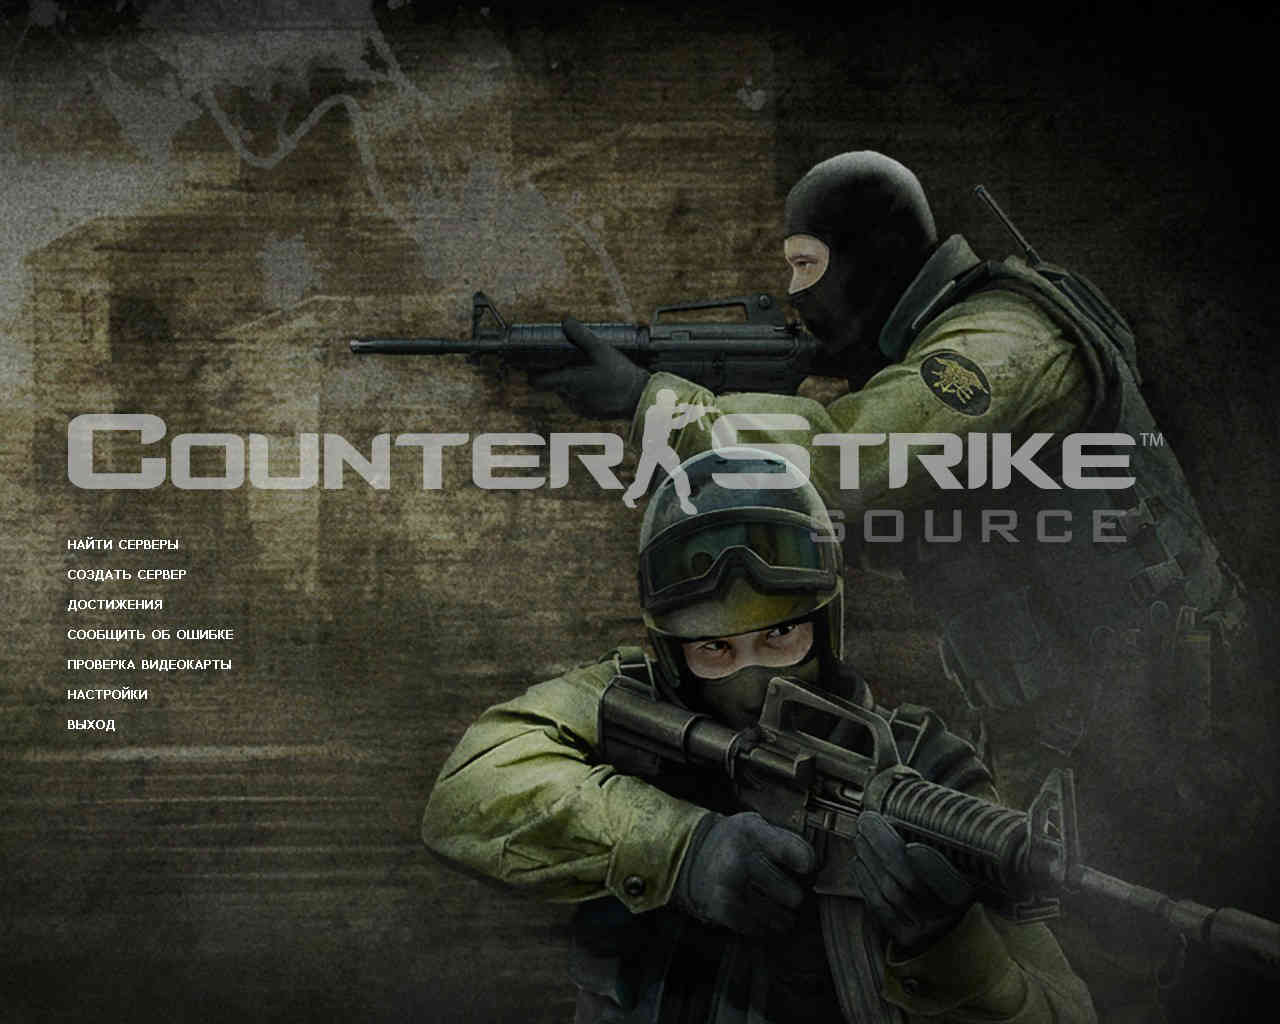 Counter strike sourse no steam